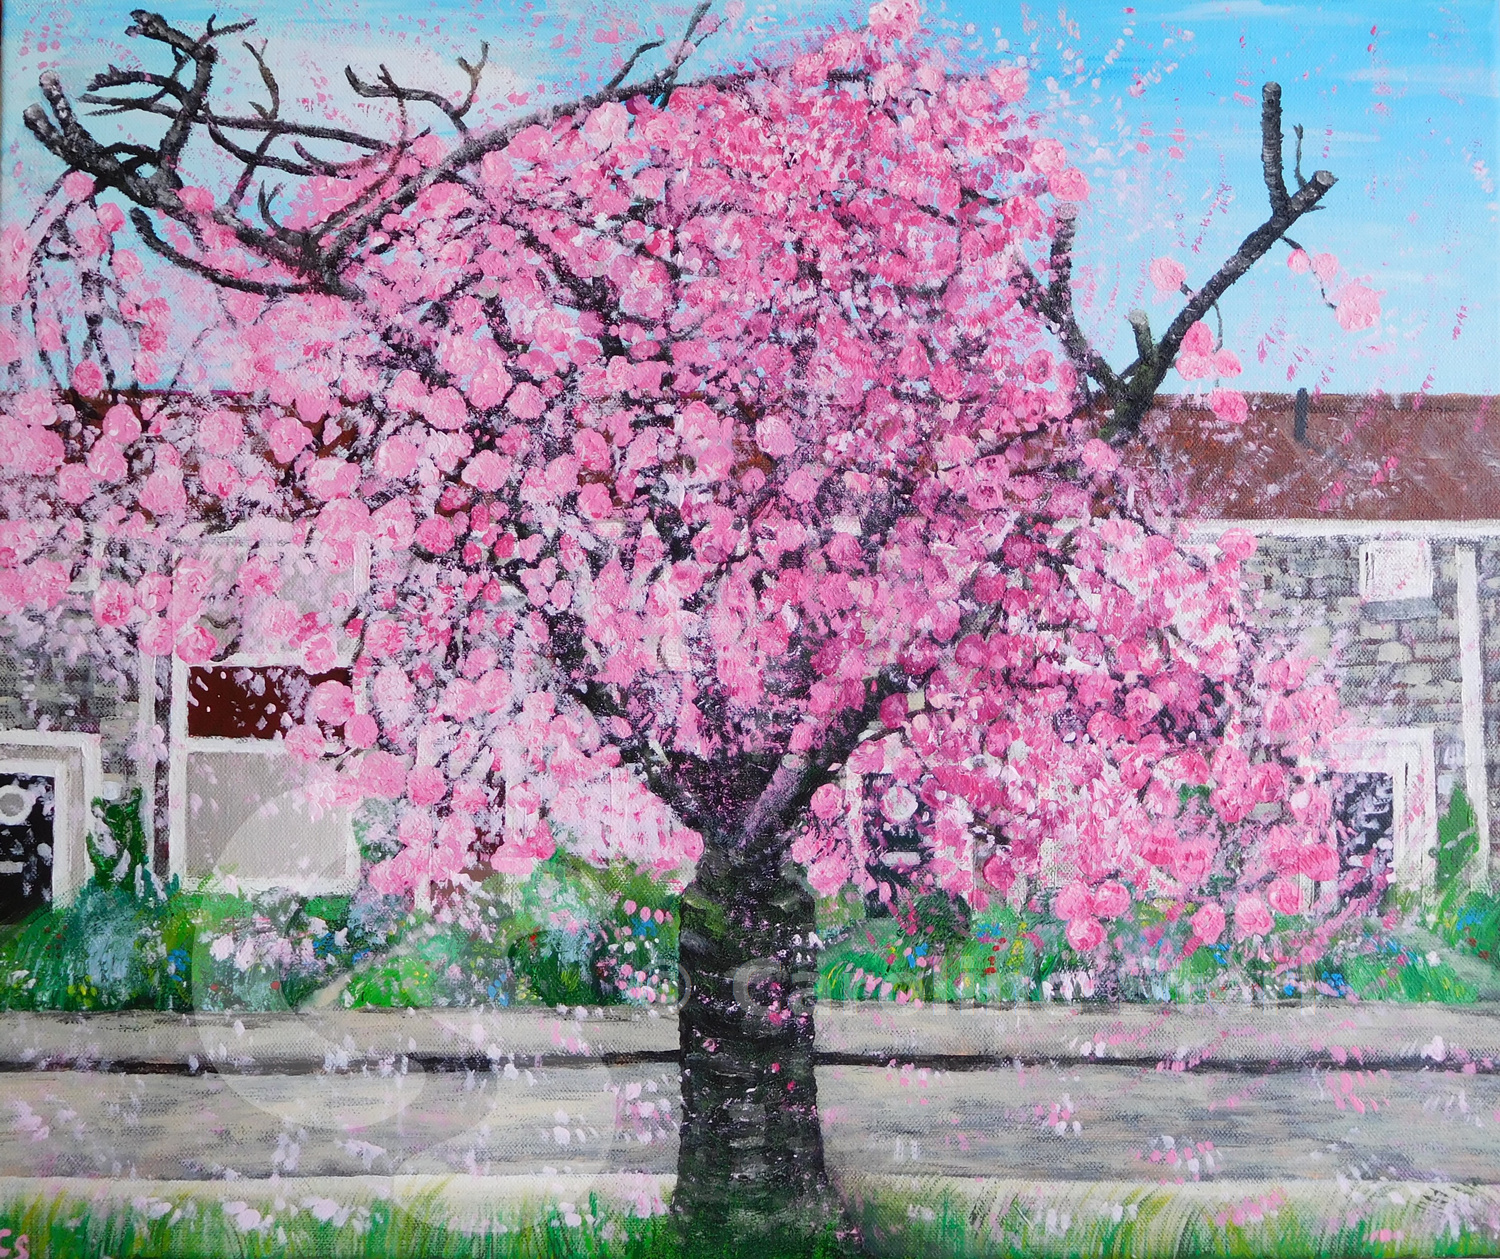 Painting: Last Spring